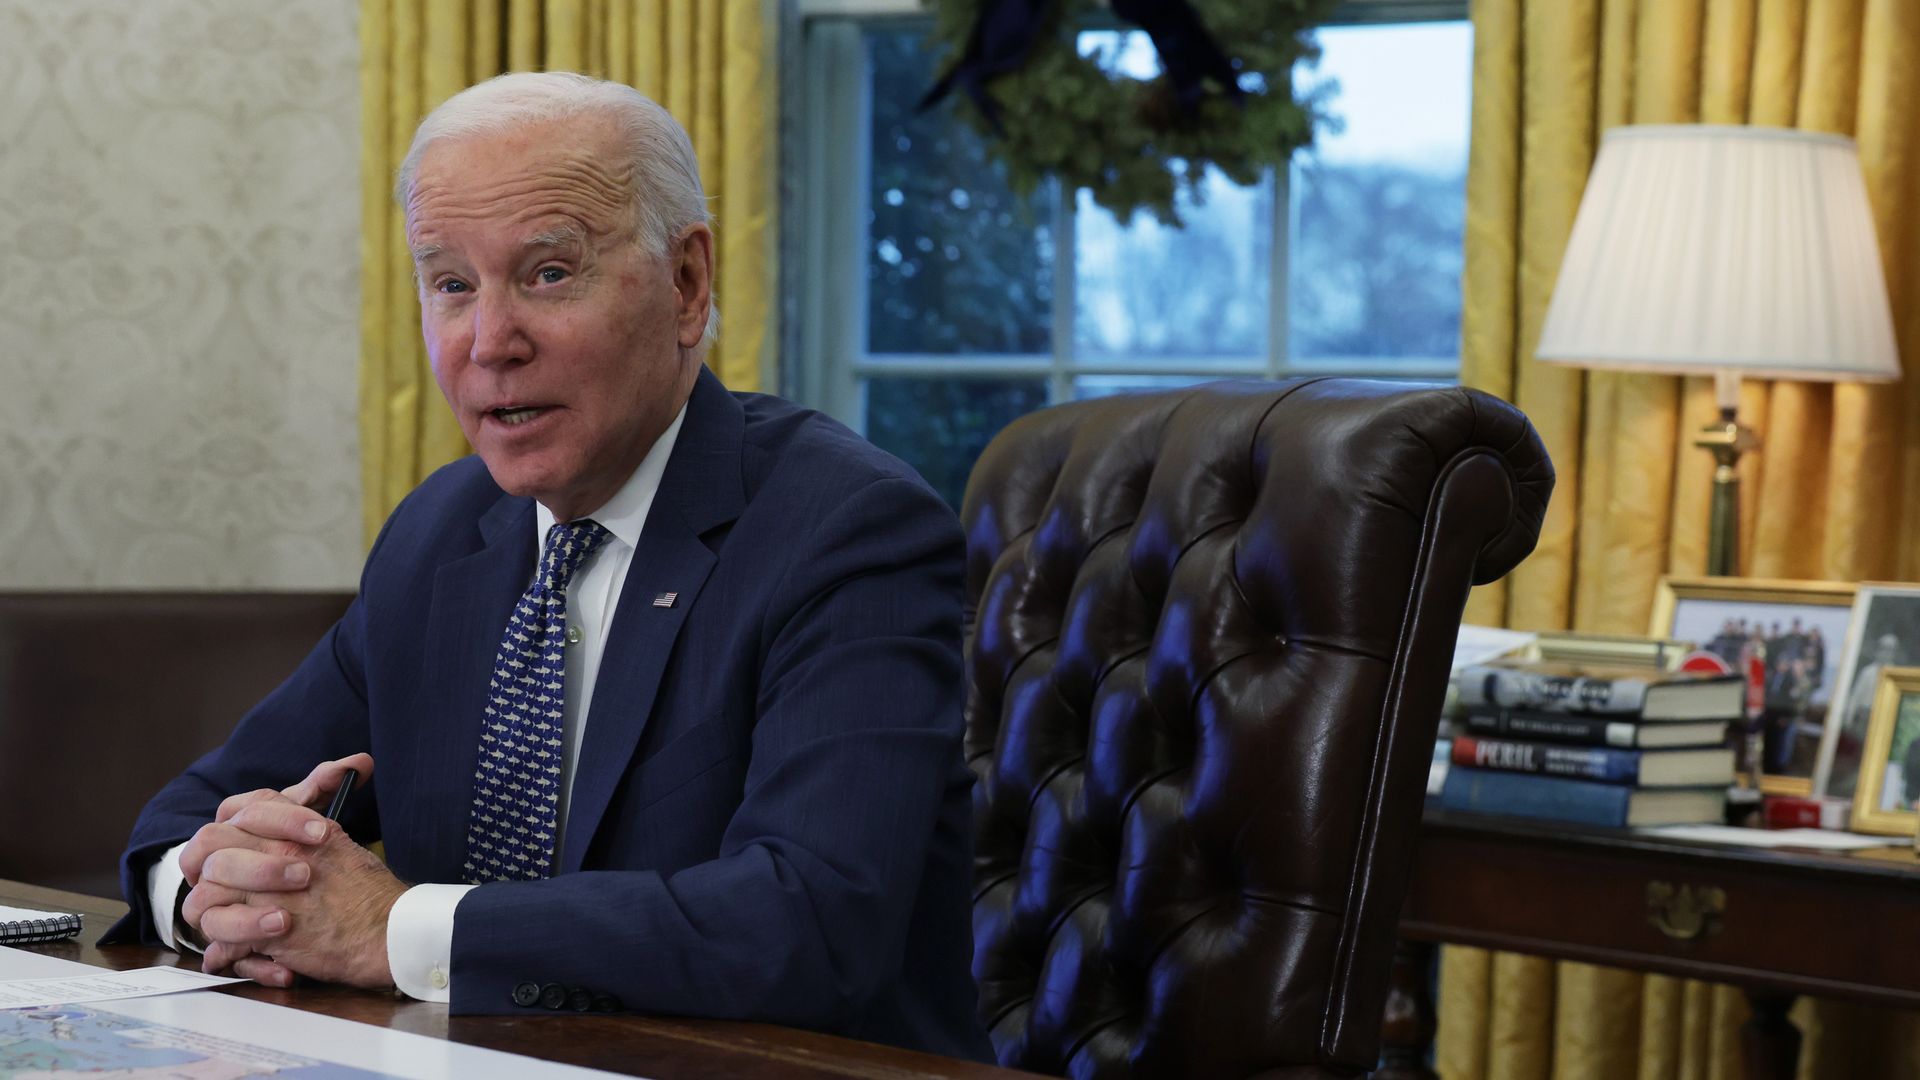 President Biden speaks to members of the press in the Oval Office on Thursday.